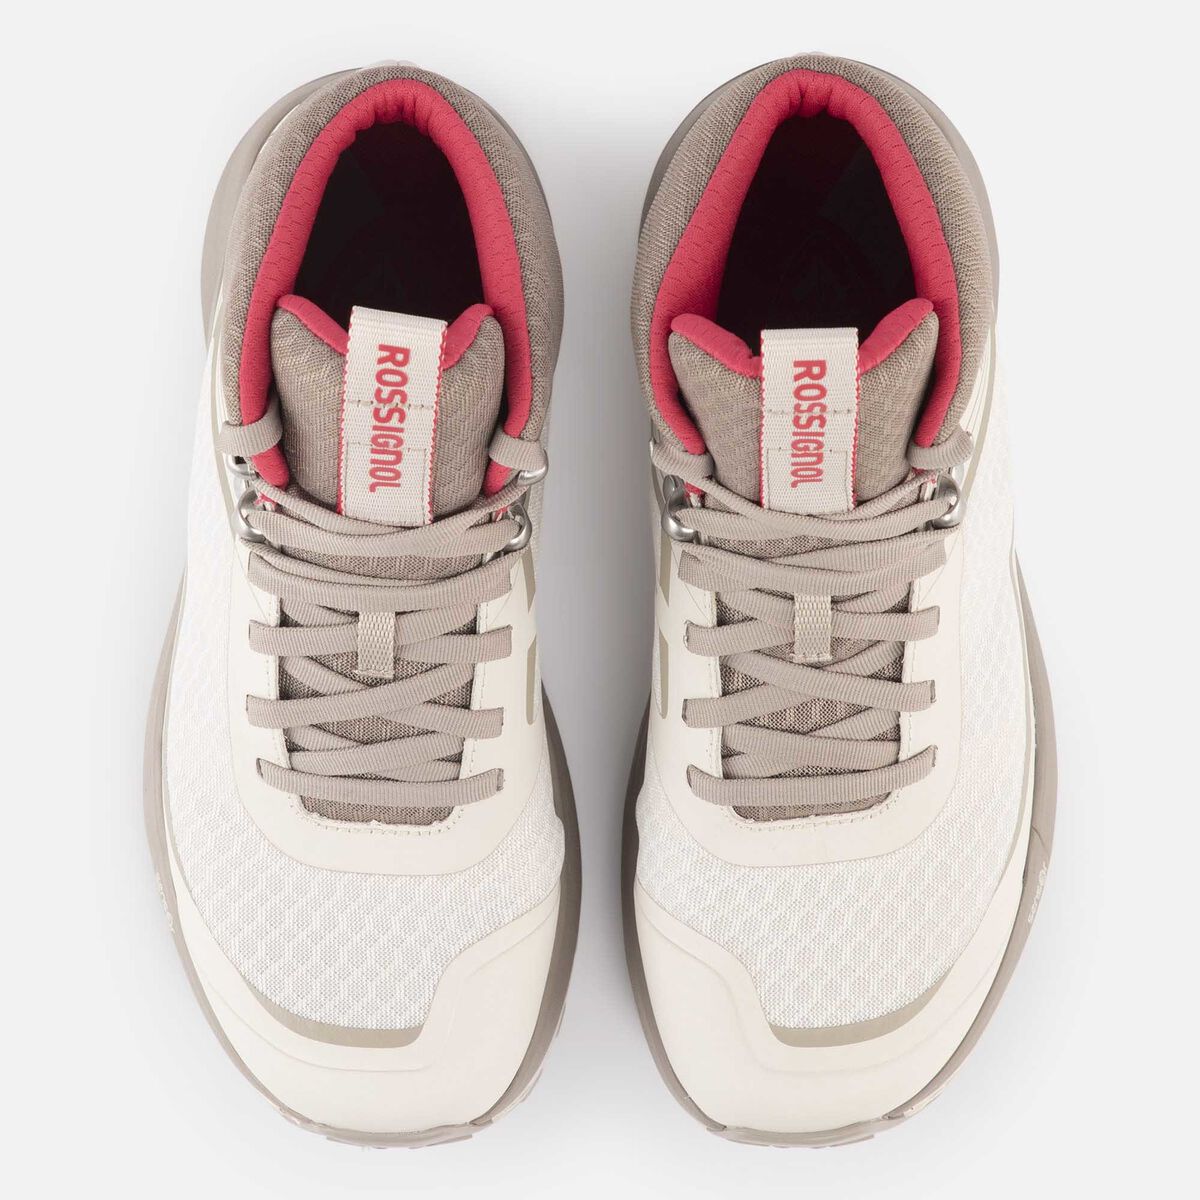 Rossignol Women's khaki lightweight hiking shoes grey